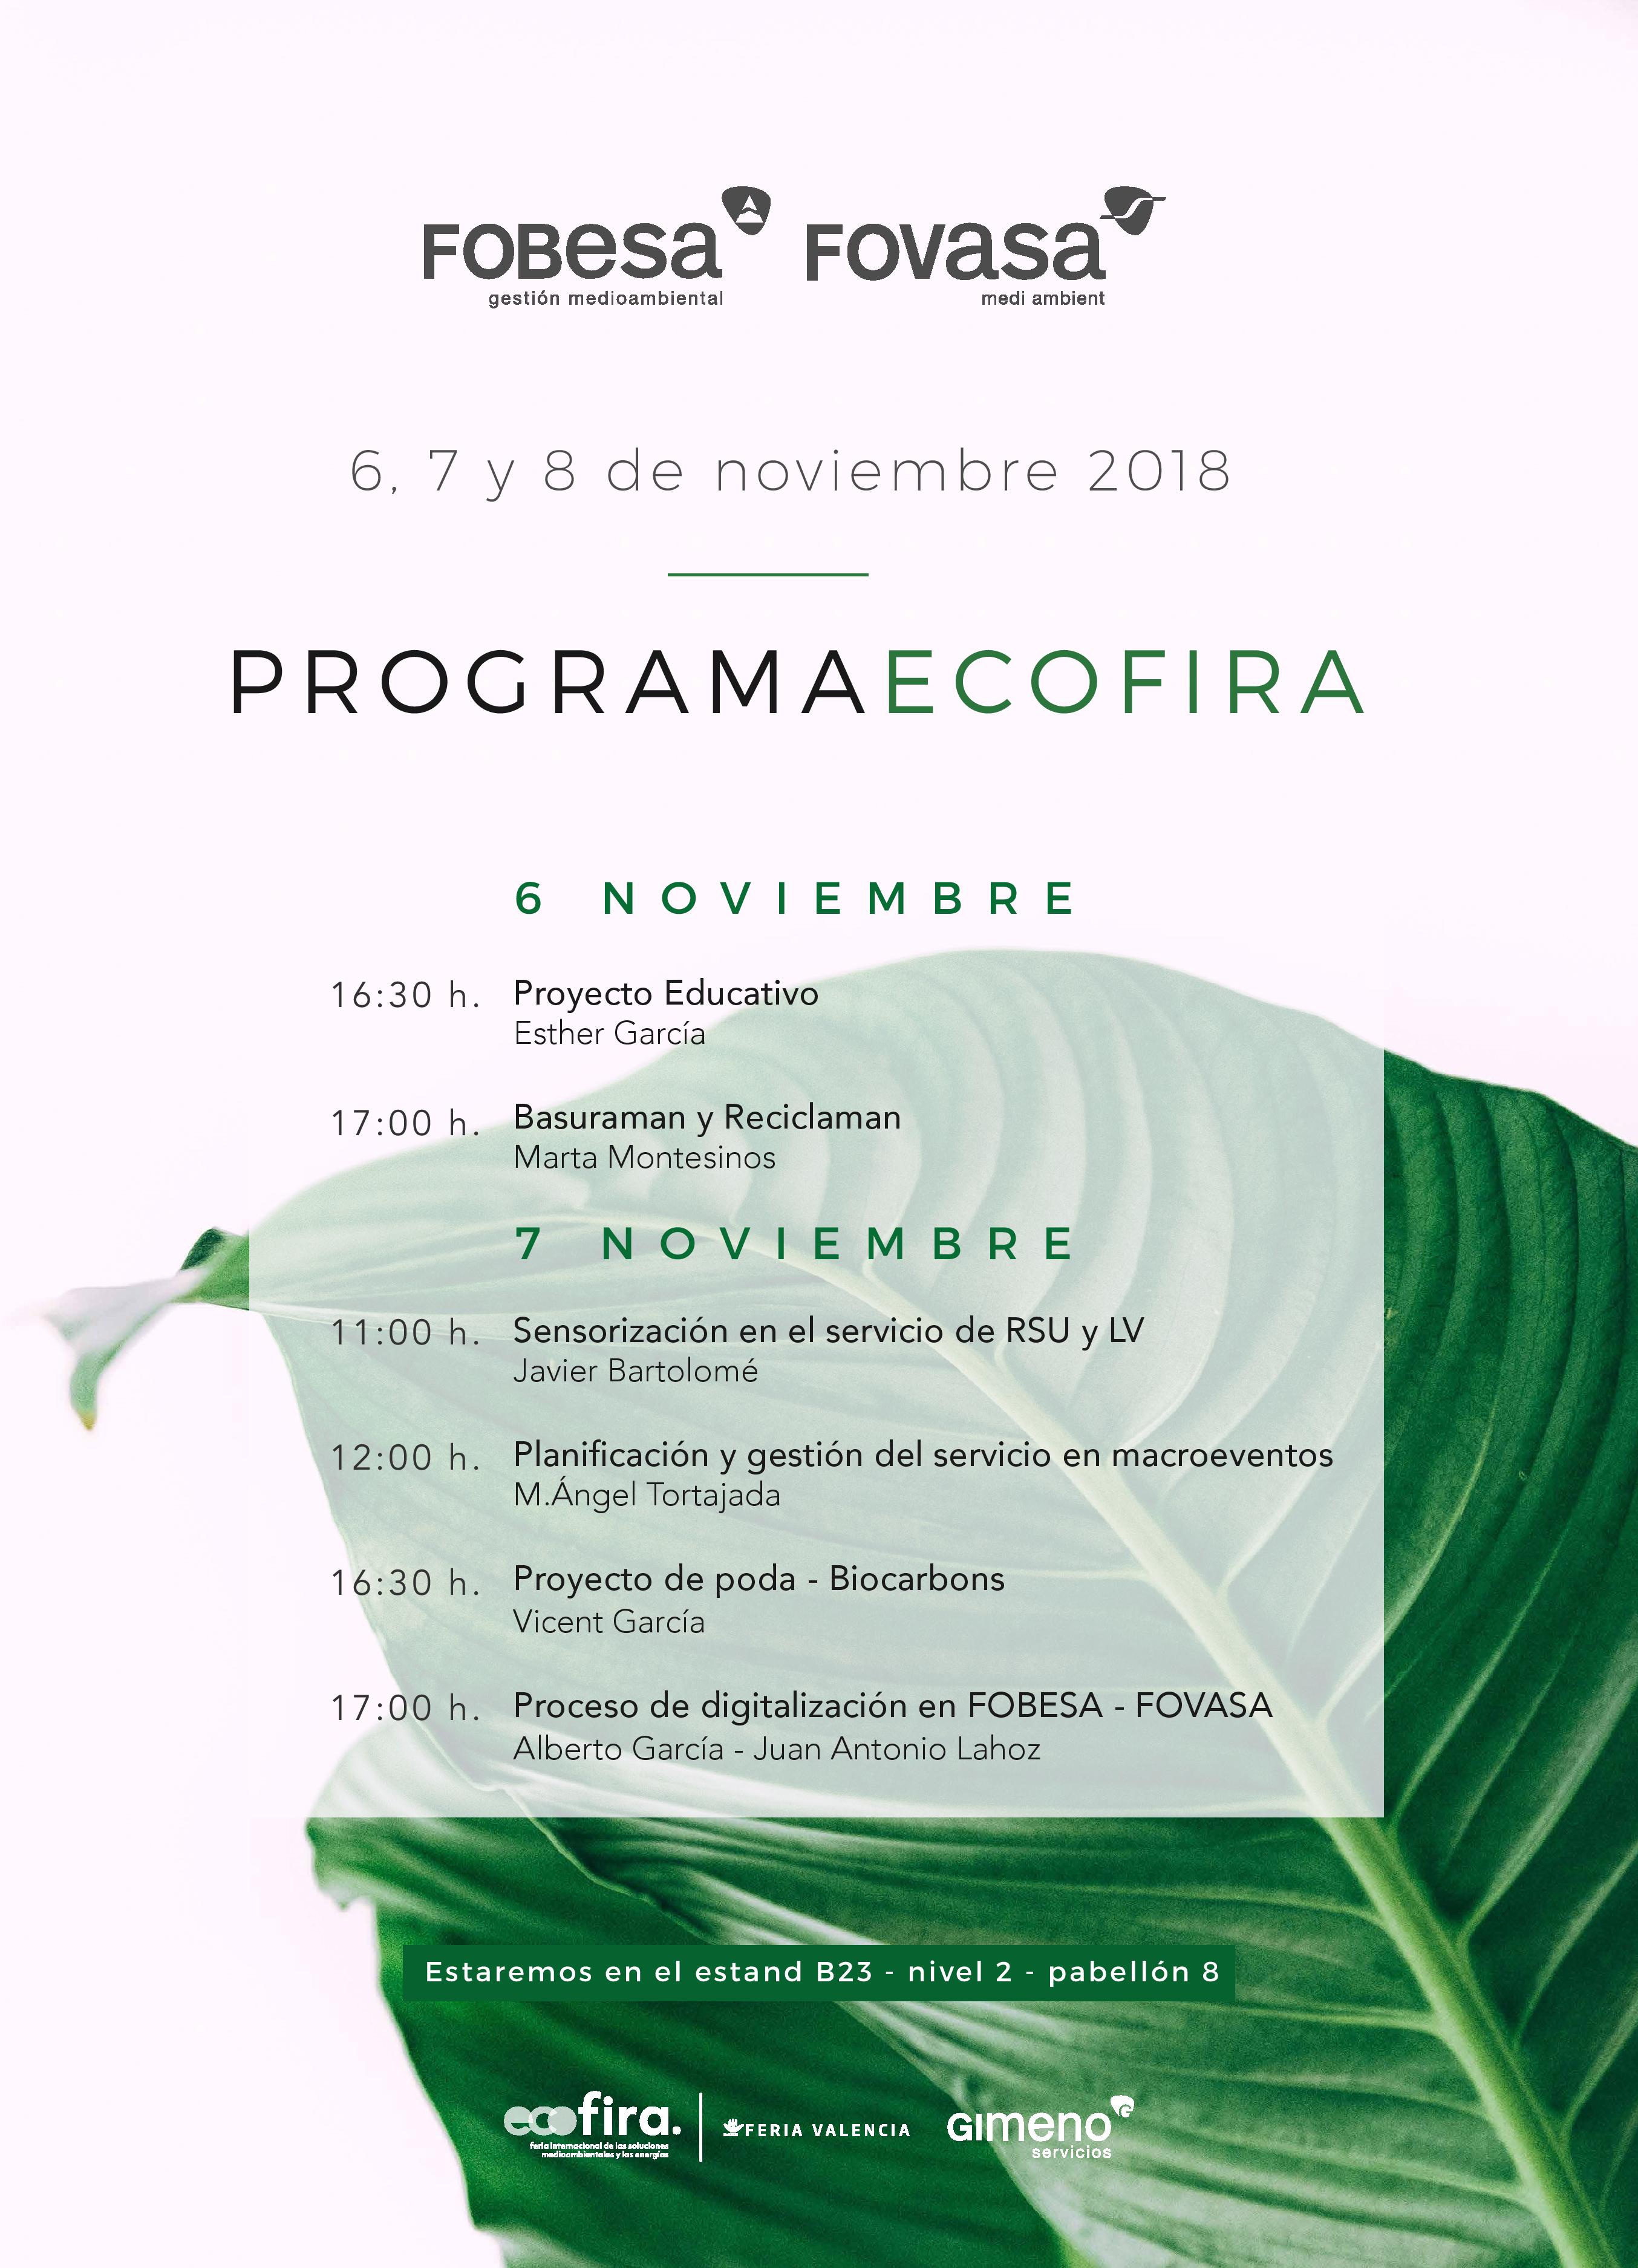 Ecofira2018_PROGRAMA_FOBESAFOVASA-page-001